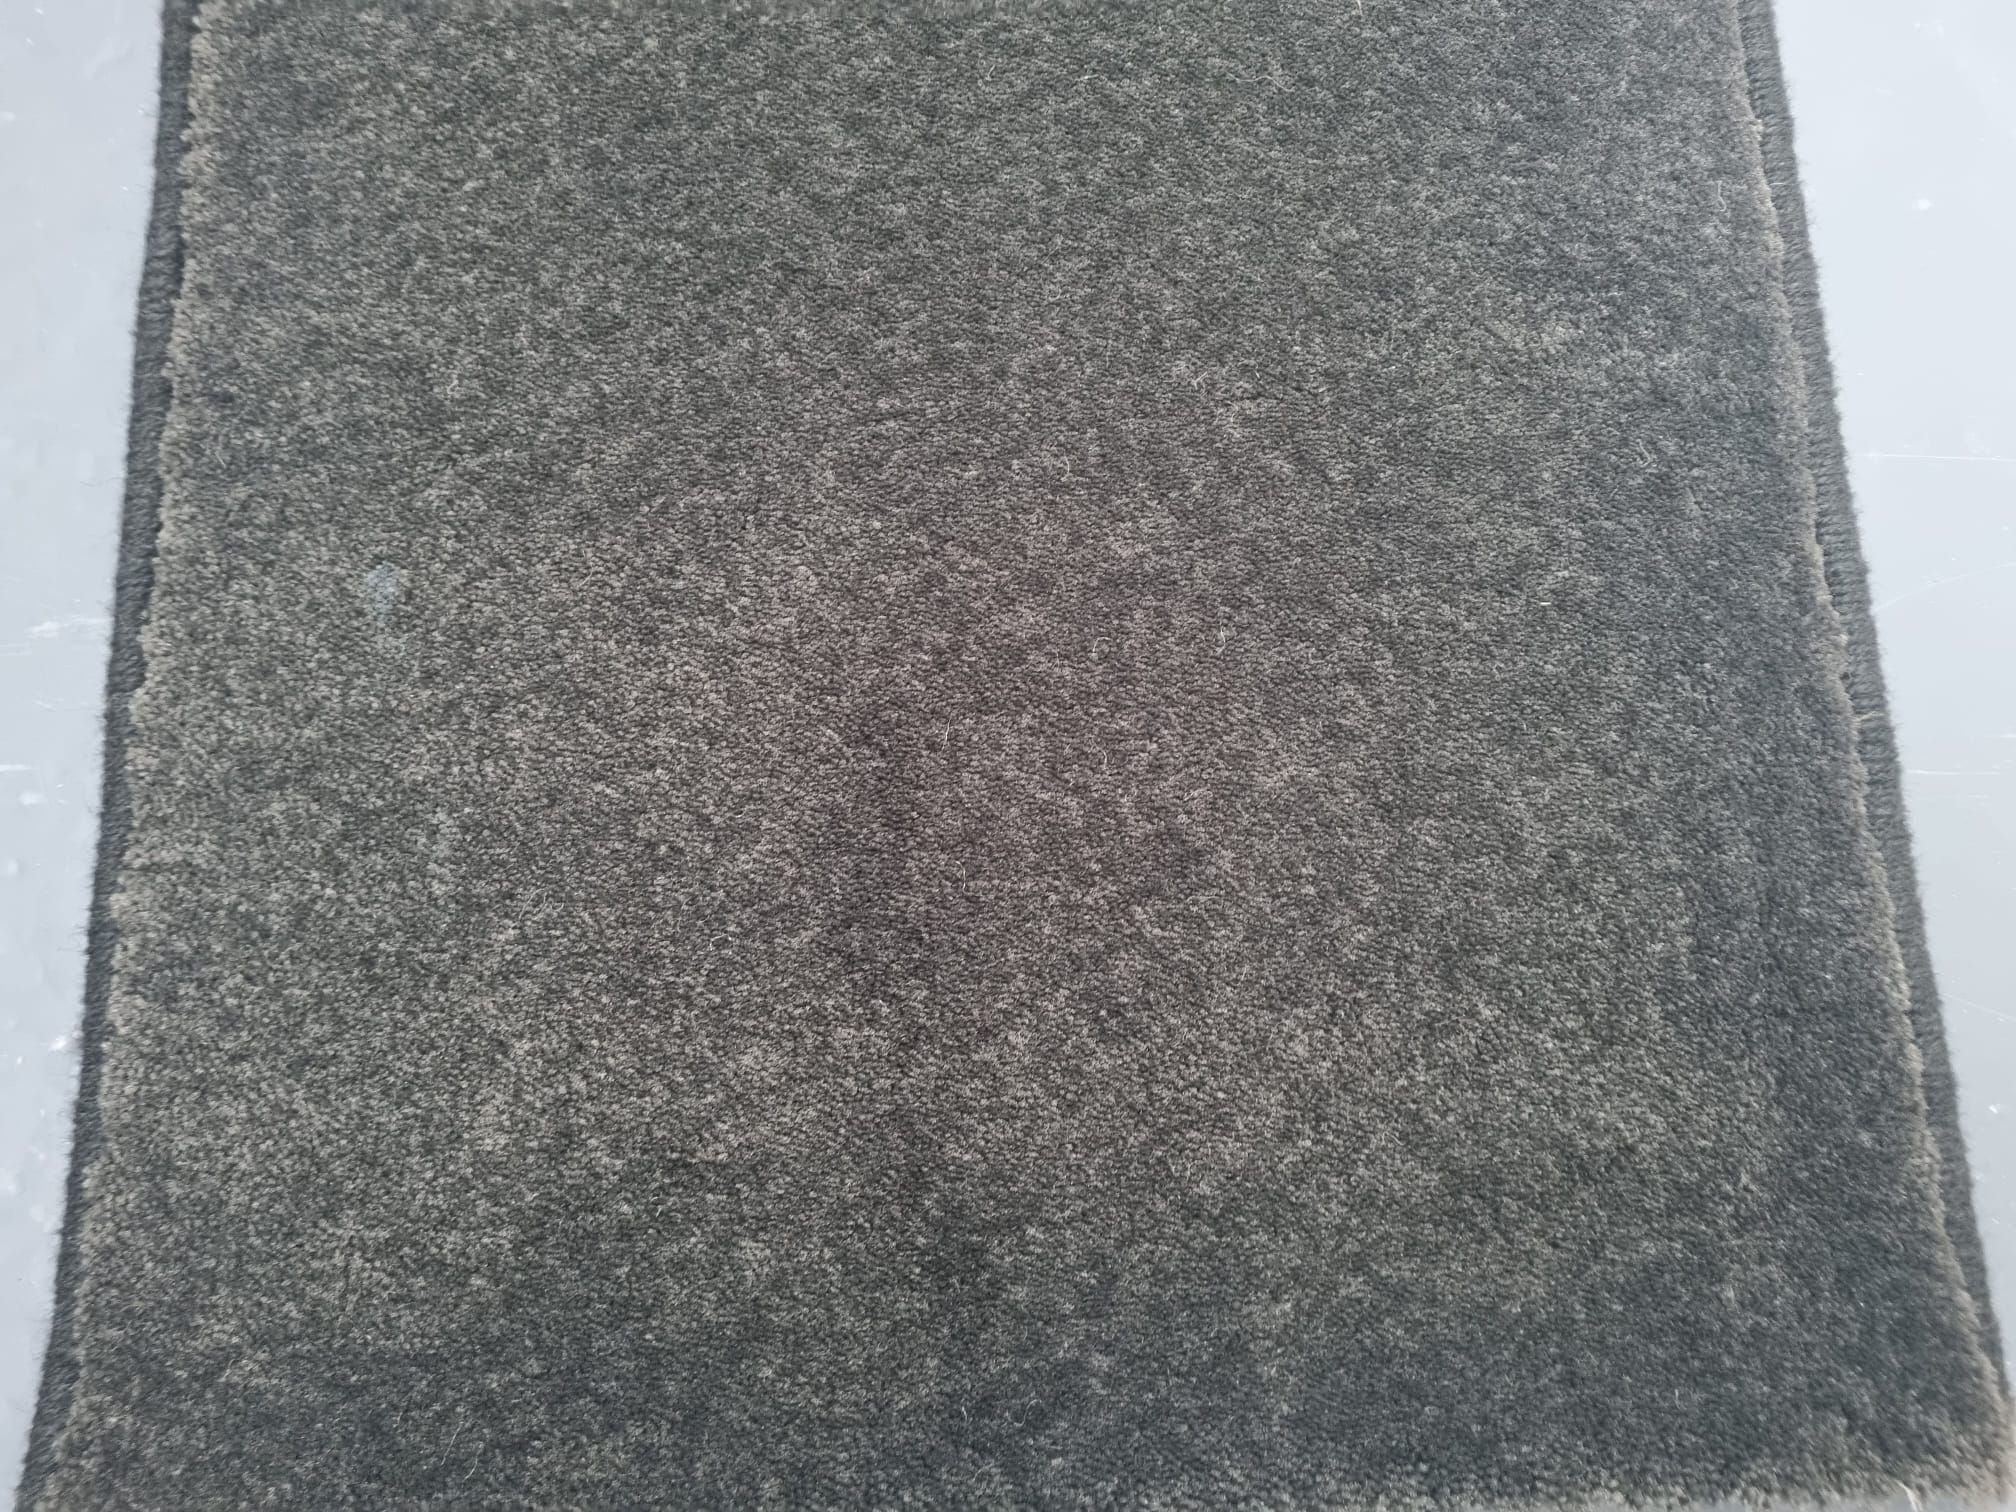 Dark grey nylon stair and floor runner rug, high quality, hand-made carpet